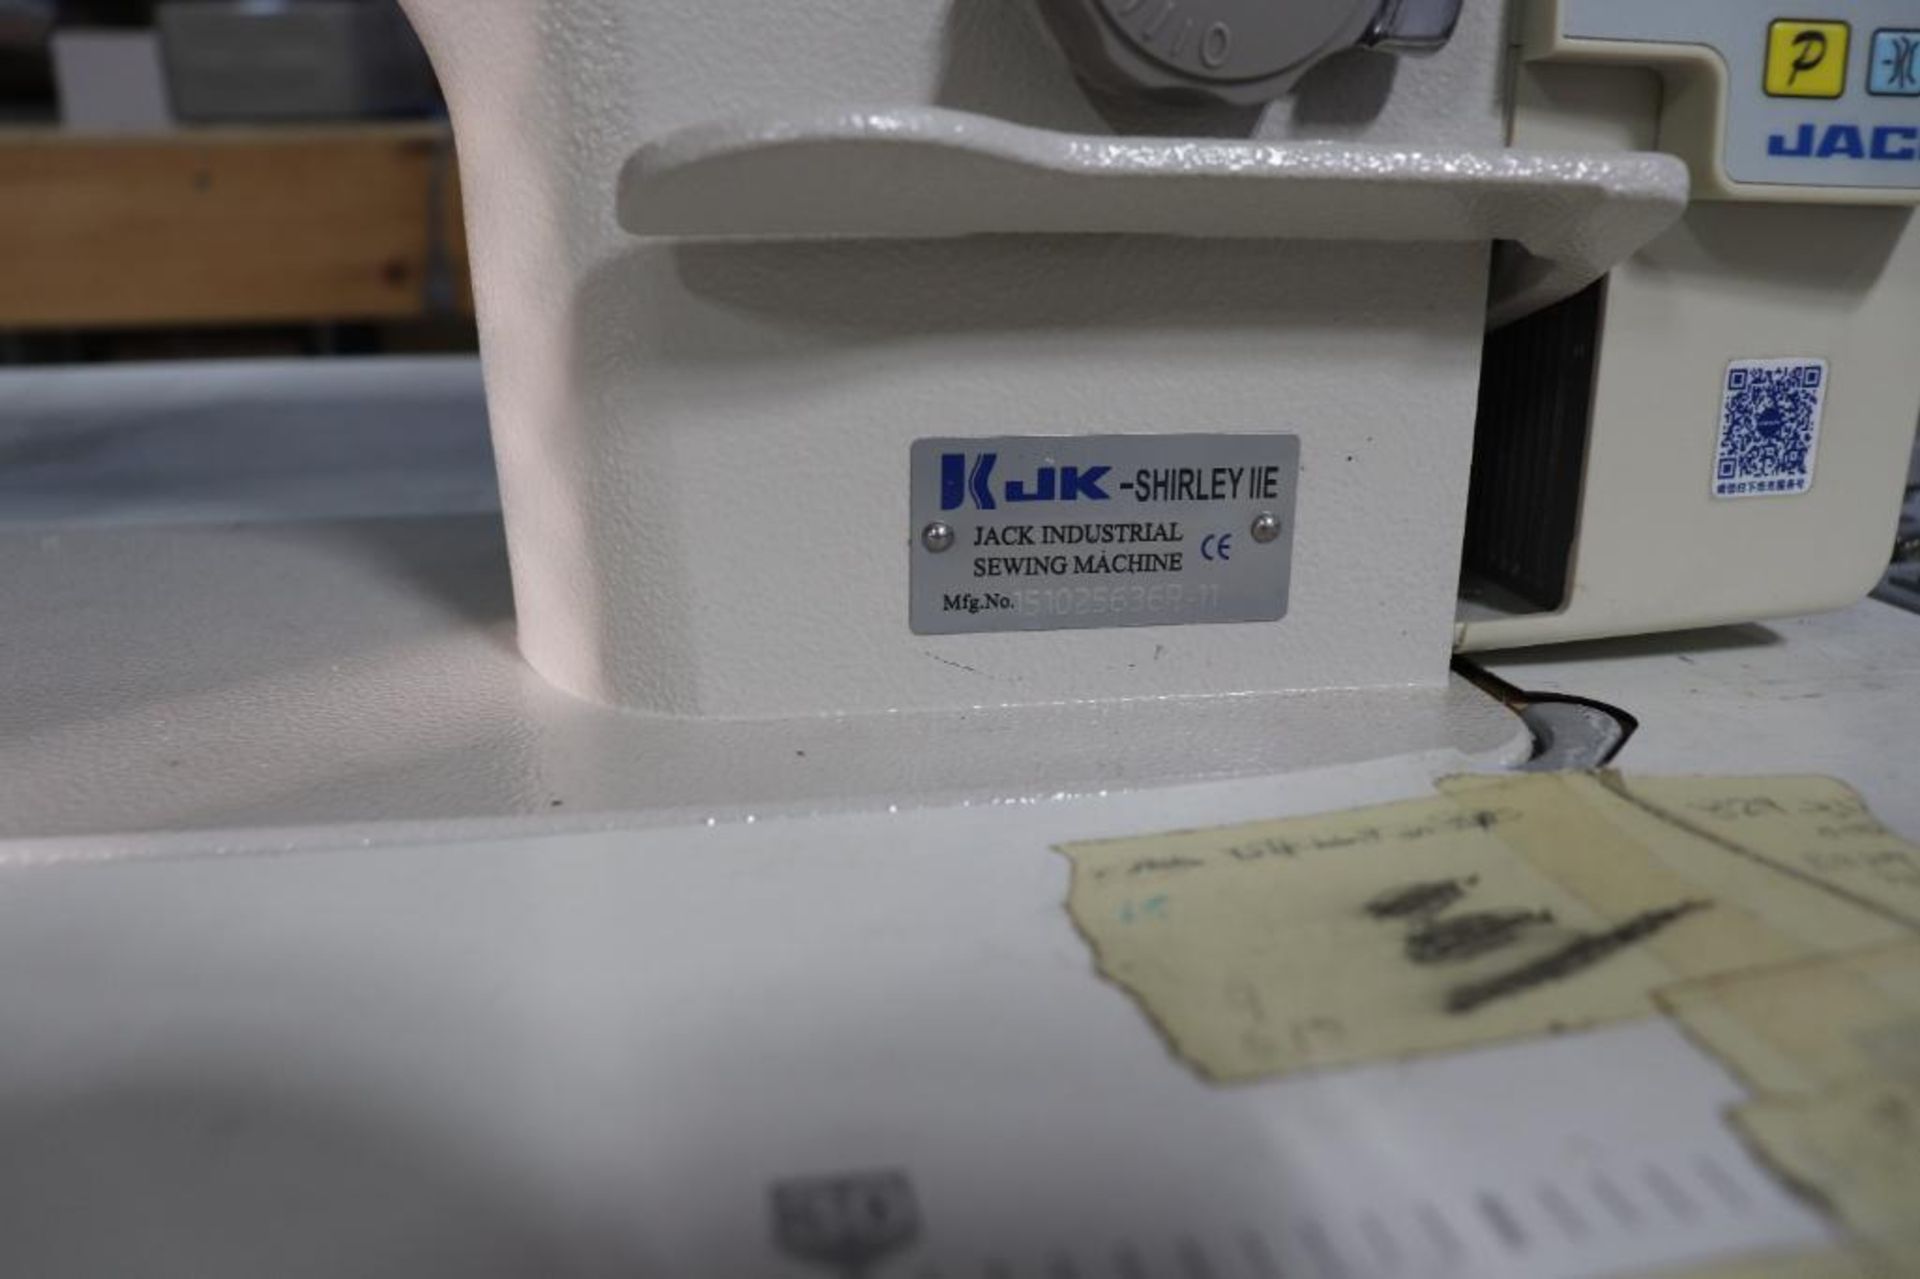 Jack JK-SHIRLEY IIE lockstitch sewing machine - Image 5 of 8